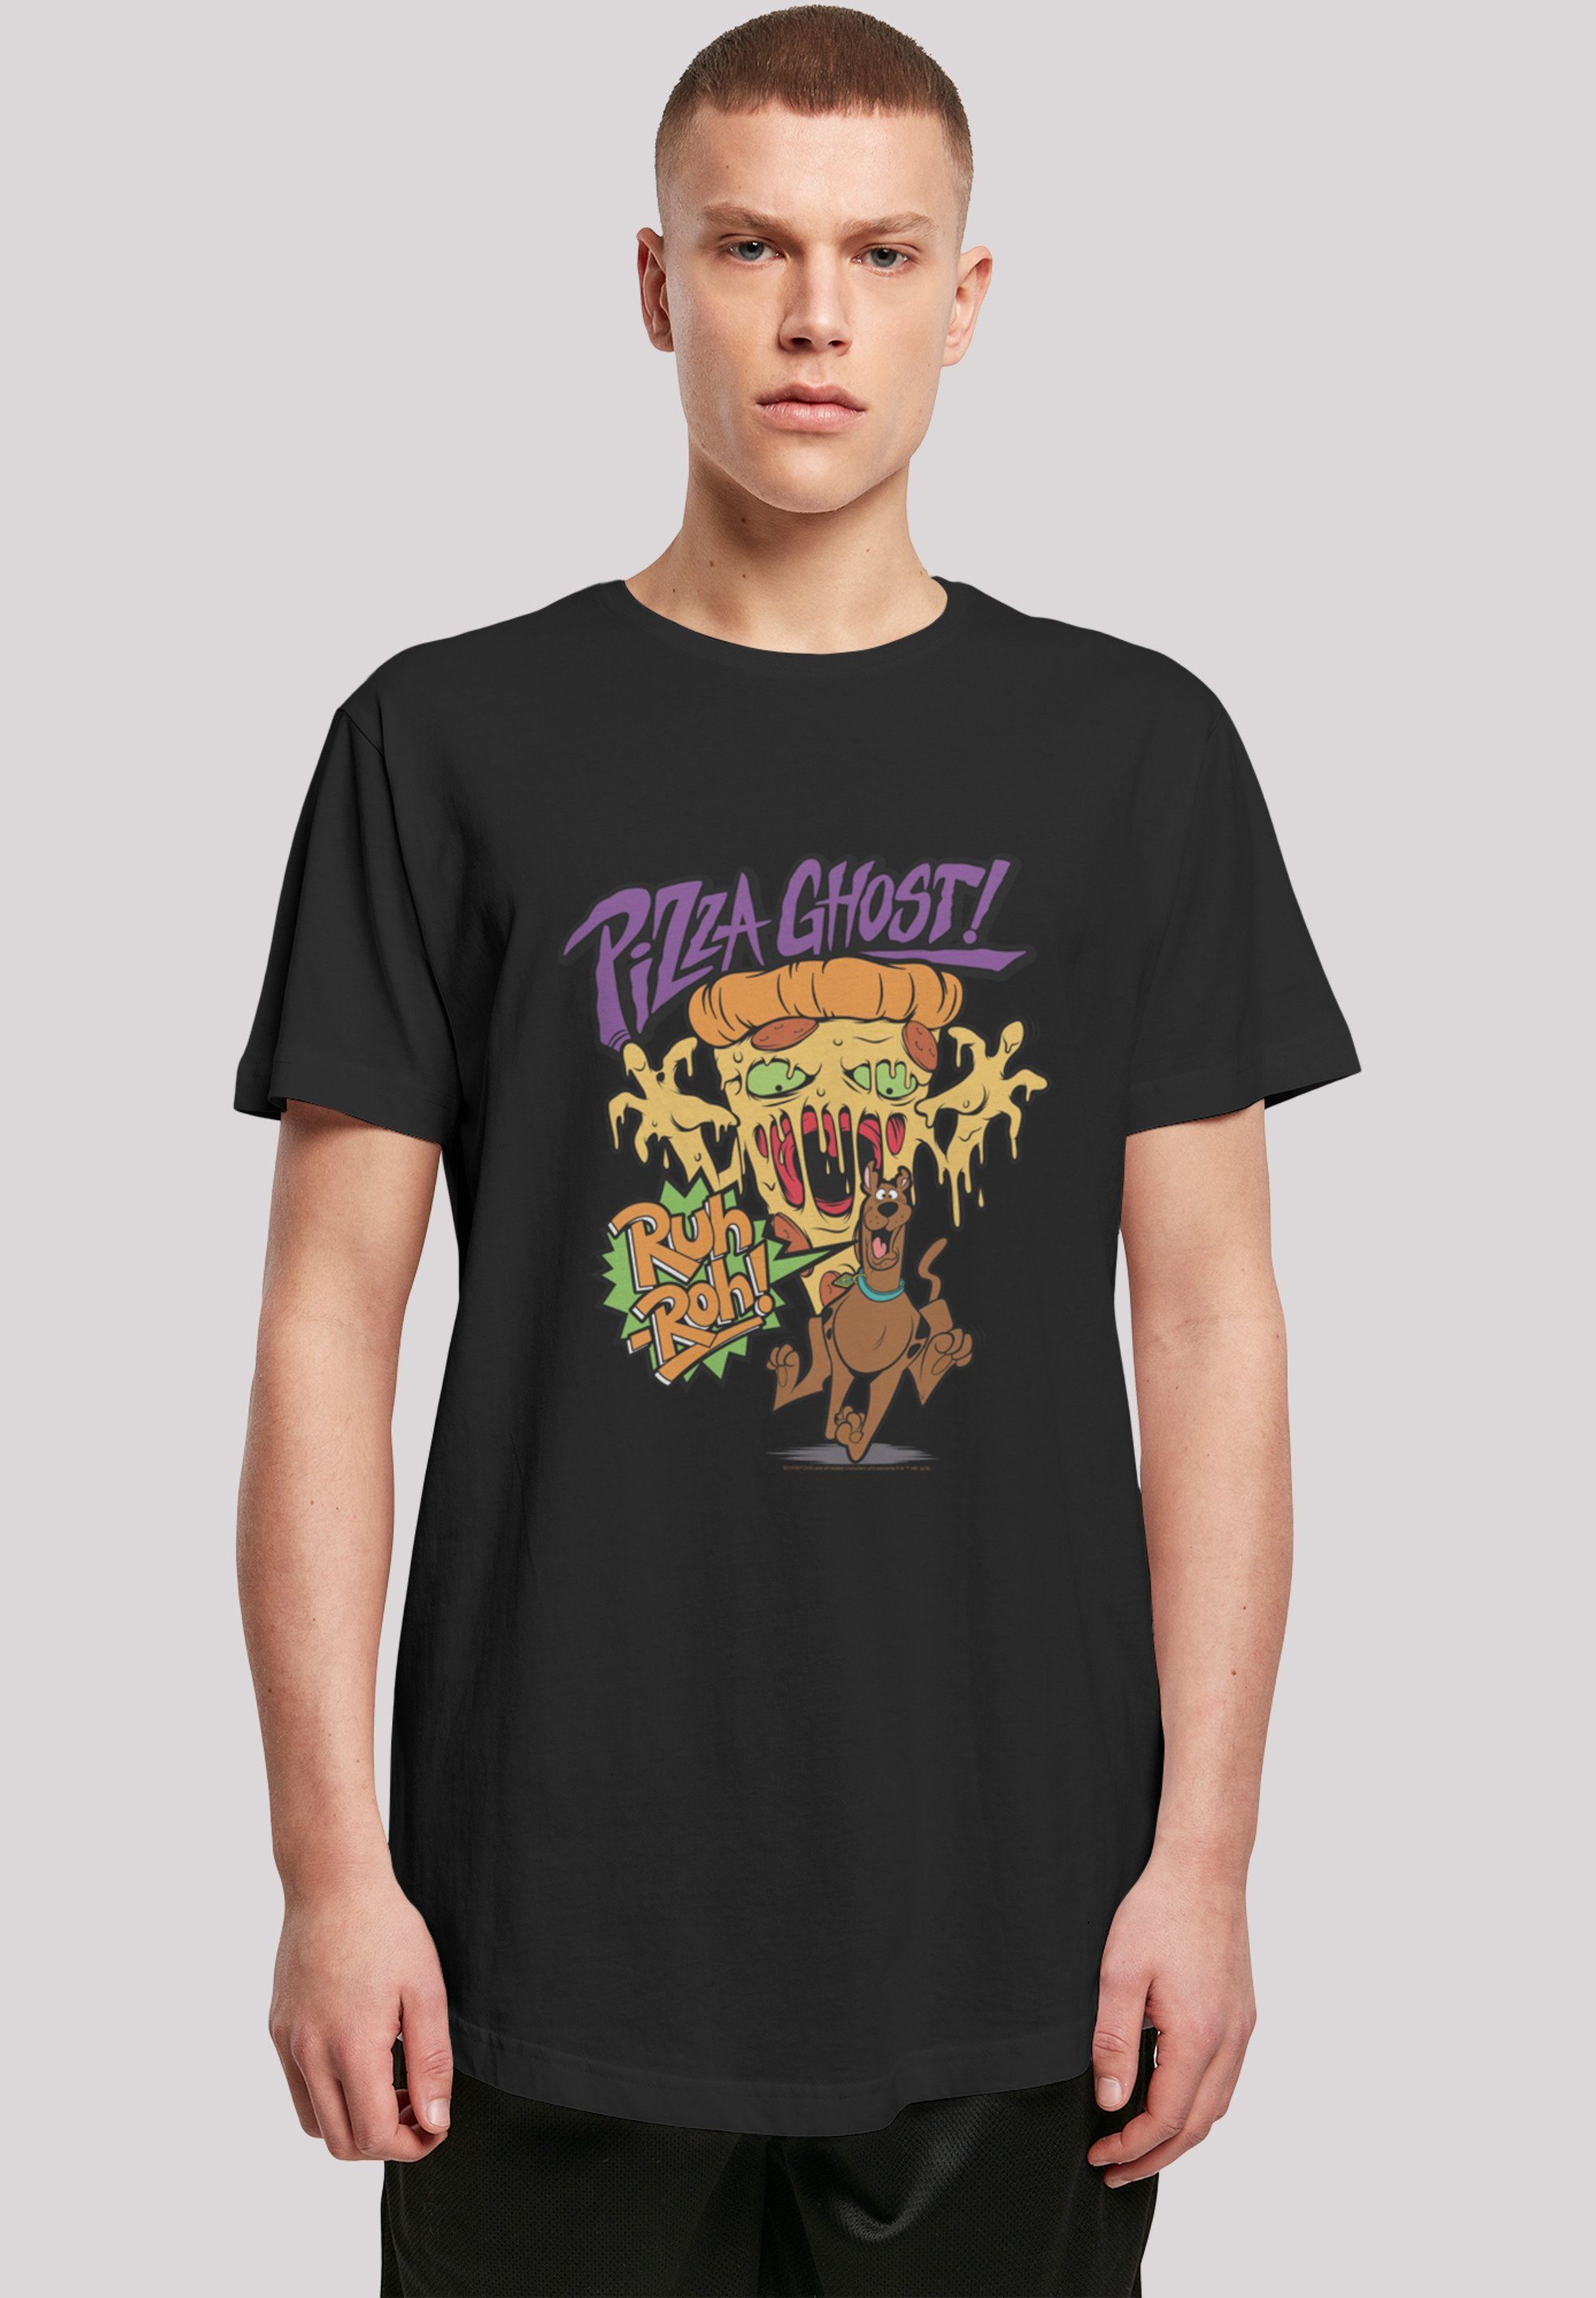 Scooby Geist T-Shirt schwarz Doo Ghost Print F4NT4STIC Pizza